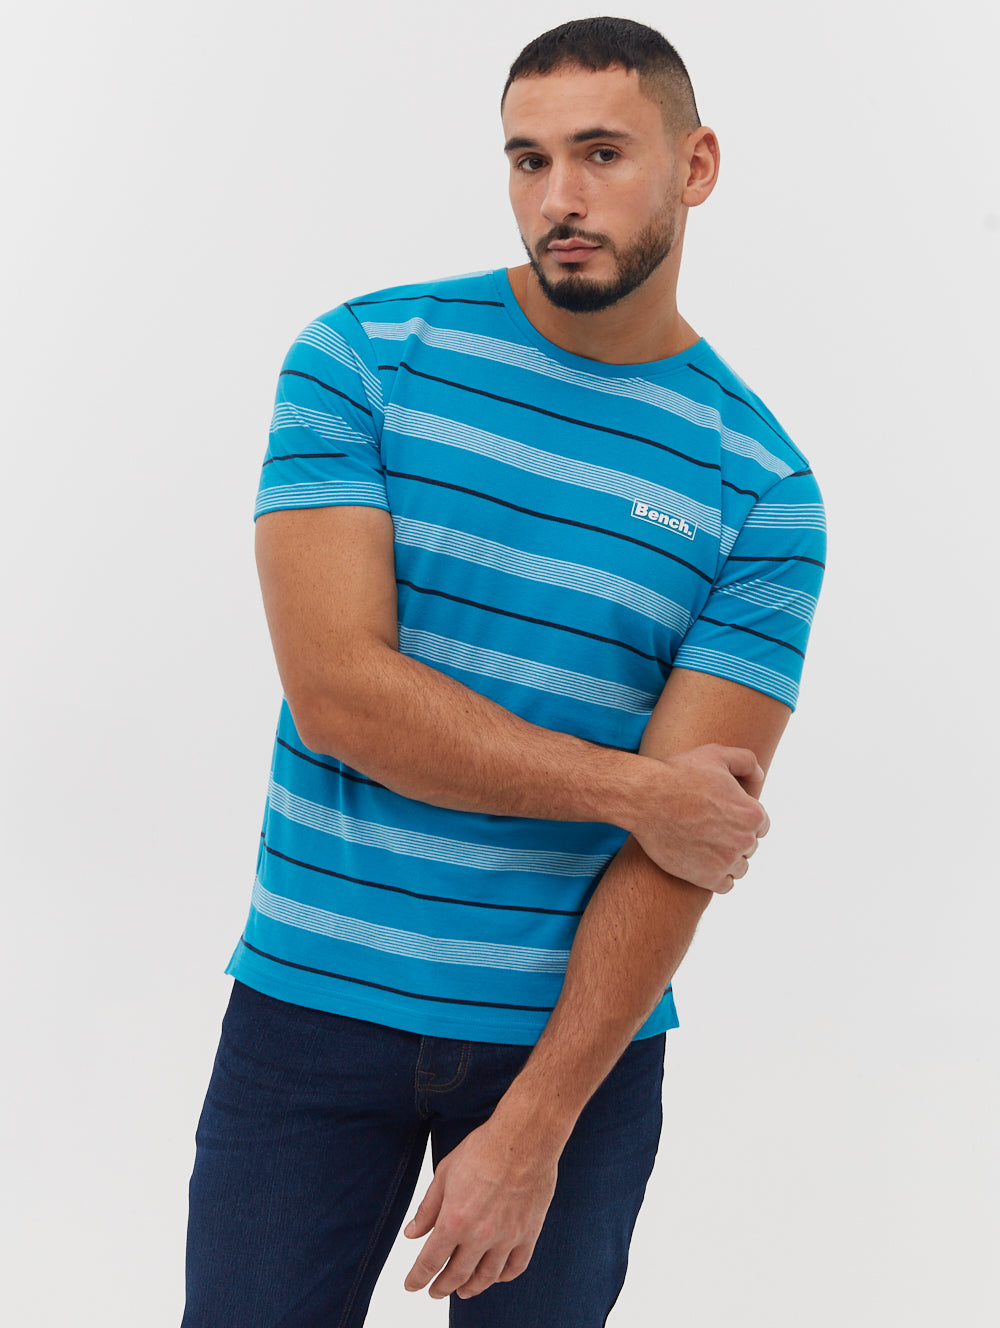 Milos Striped T-Shirt - BN2A126639